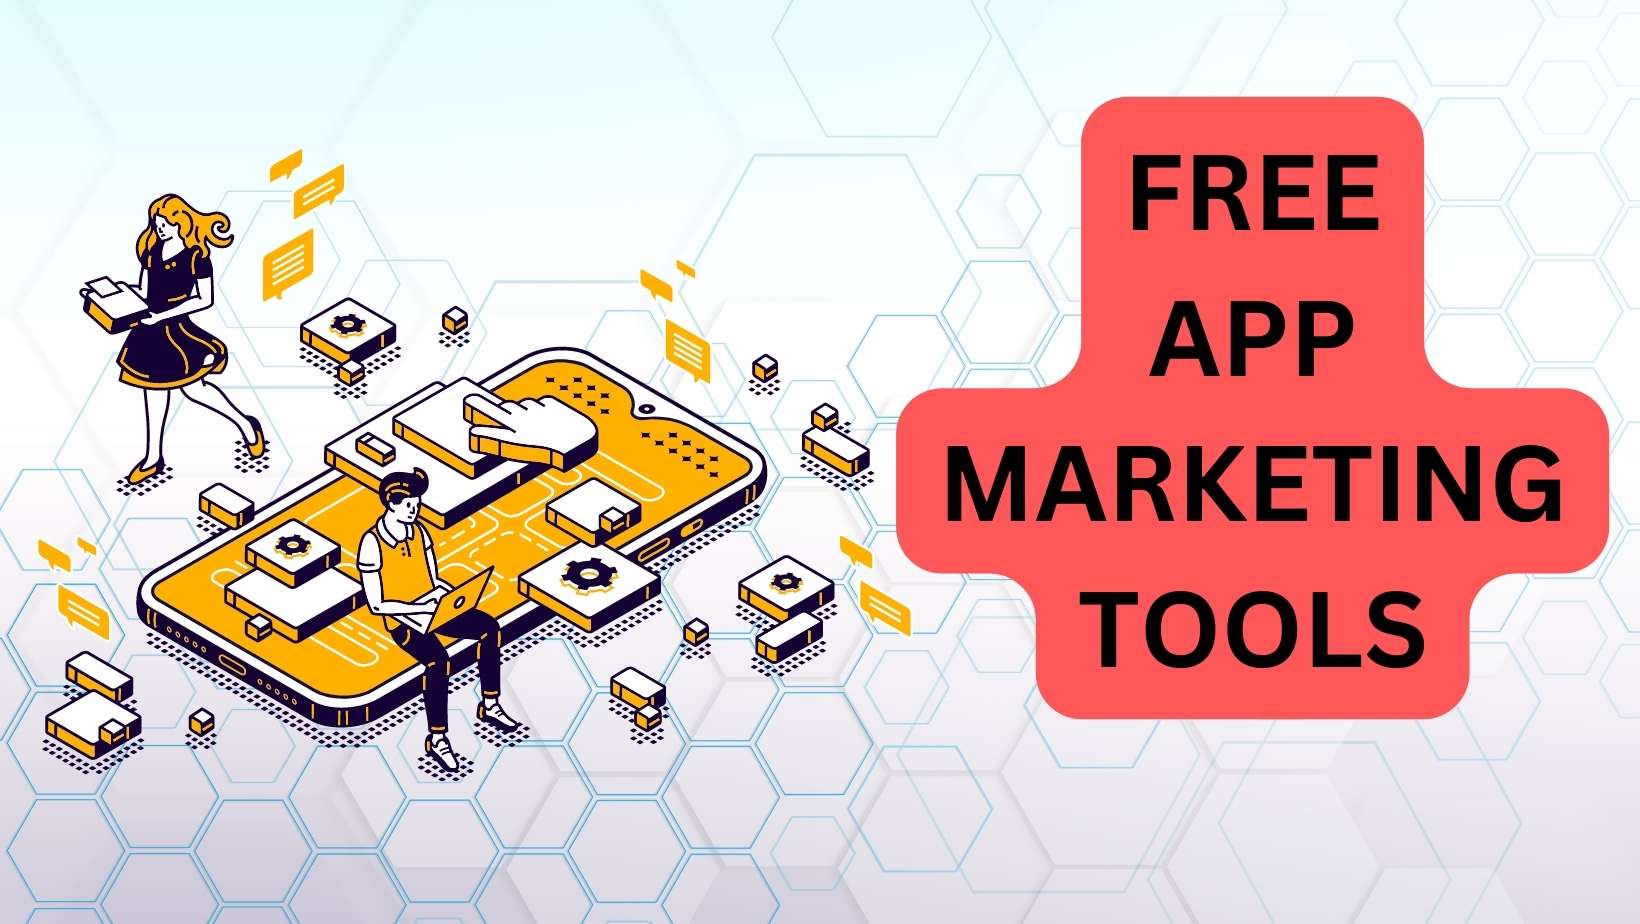 Free App Marketing Tools